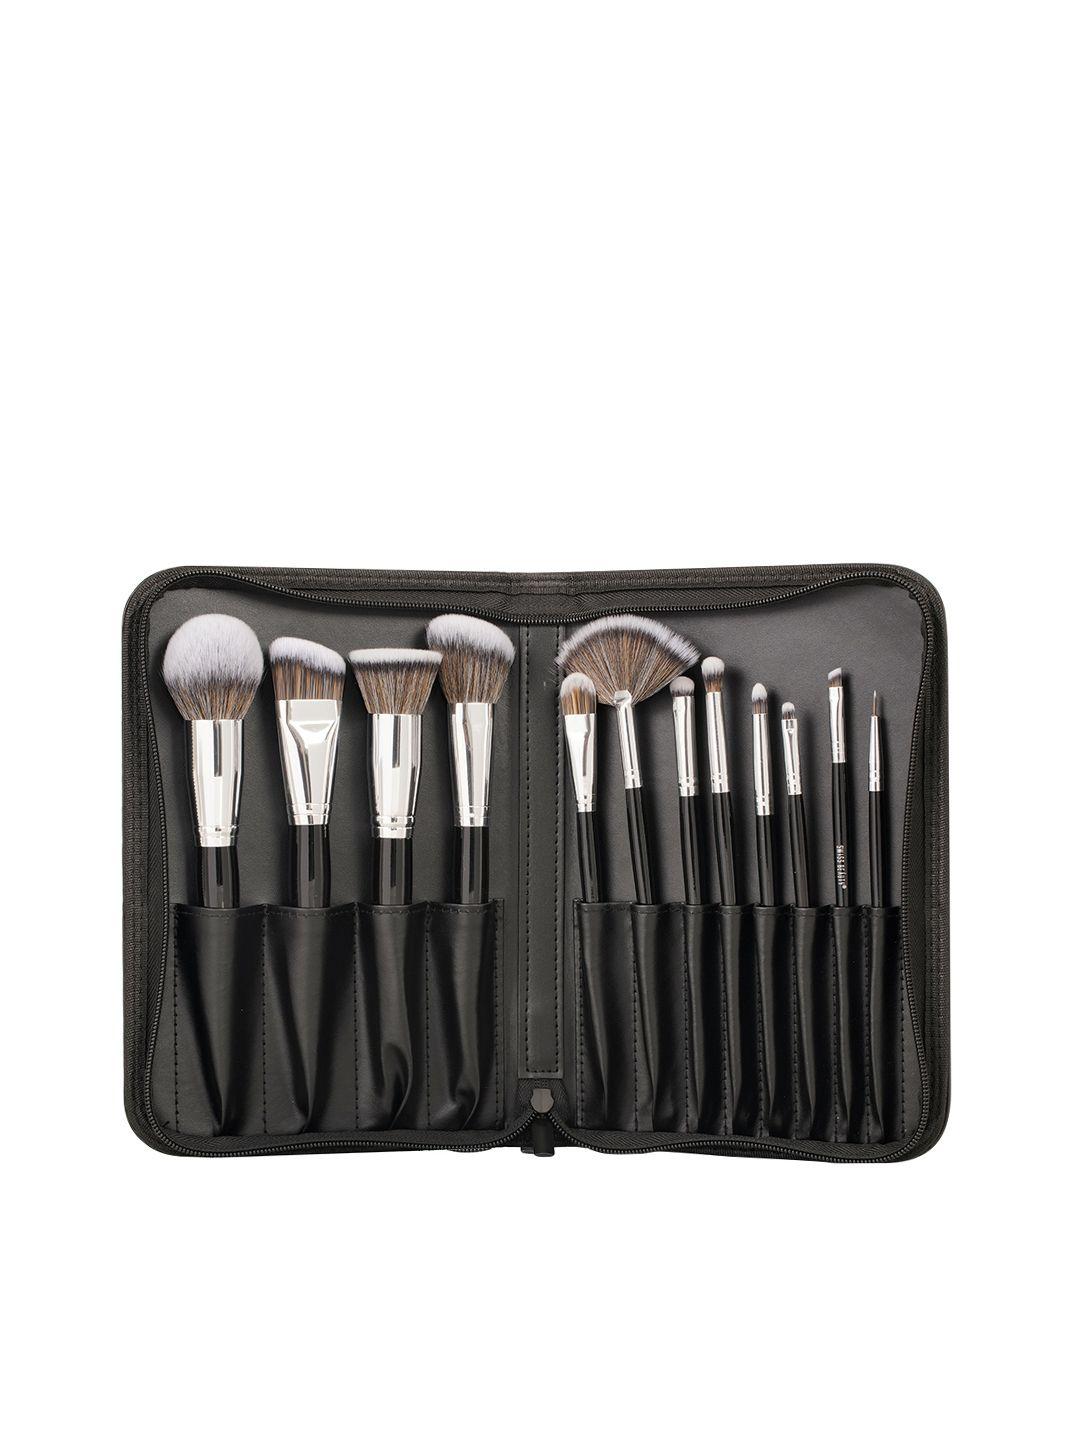 swiss beauty professional 12 makeup brush set - black